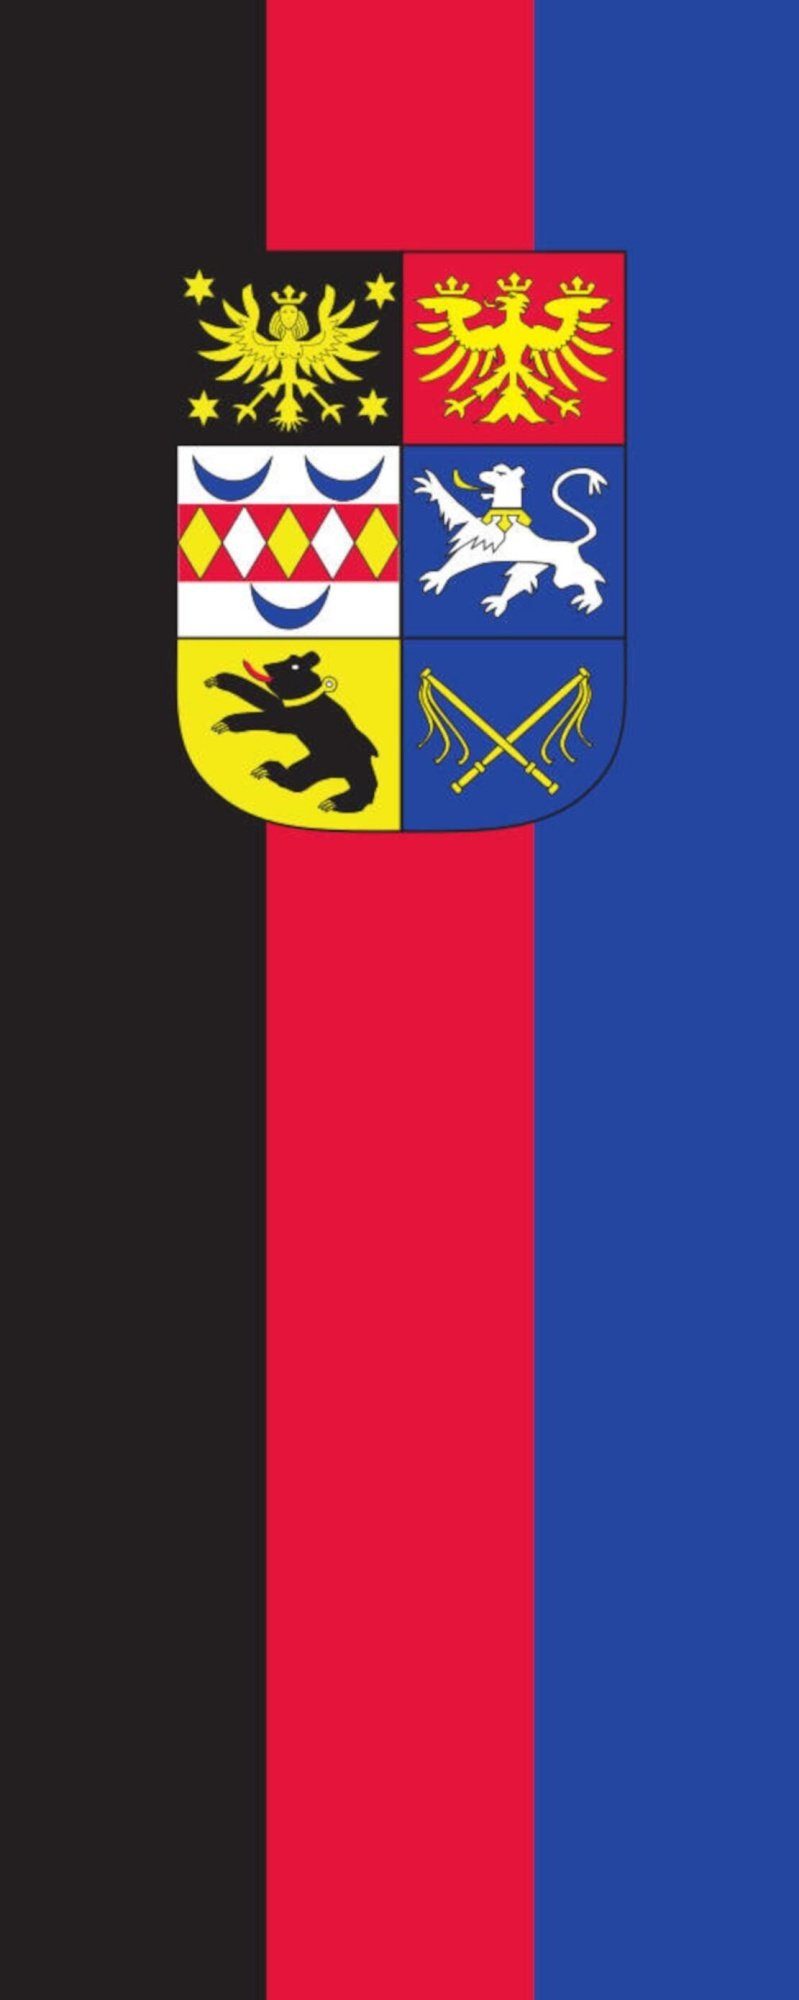 Ostfriesland g/m² Flagge Flagge Wappen 110 mit flaggenmeer Hochformat